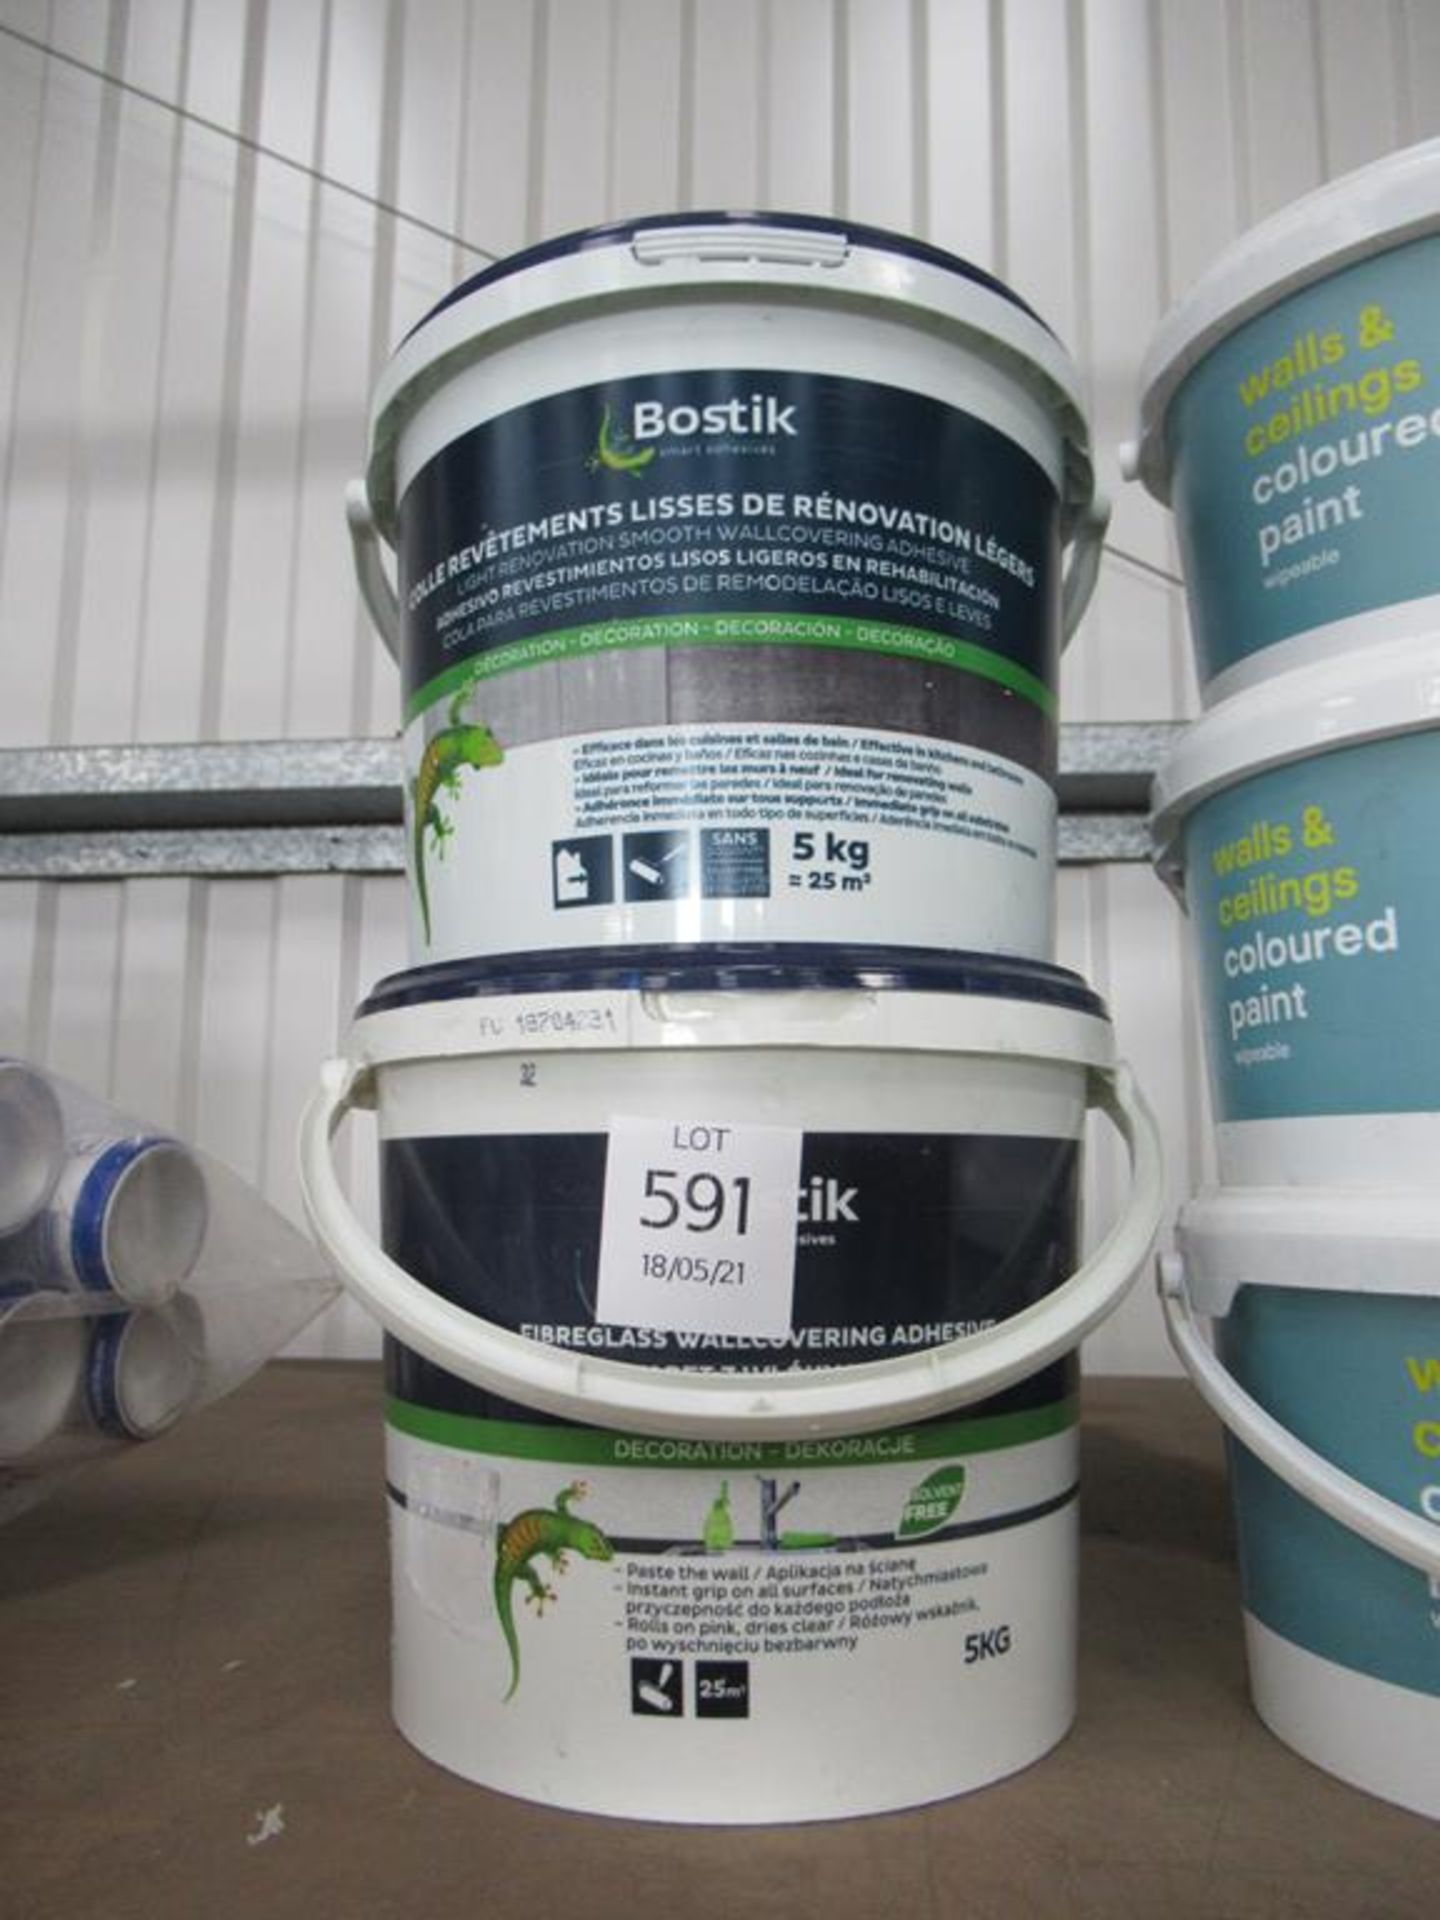 2 x 5kg Bostik fibreglass wall covering adhesive, 2 x 2.5L matt emulsion paint (2 x Mendoza), 1 x 2. - Image 3 of 3